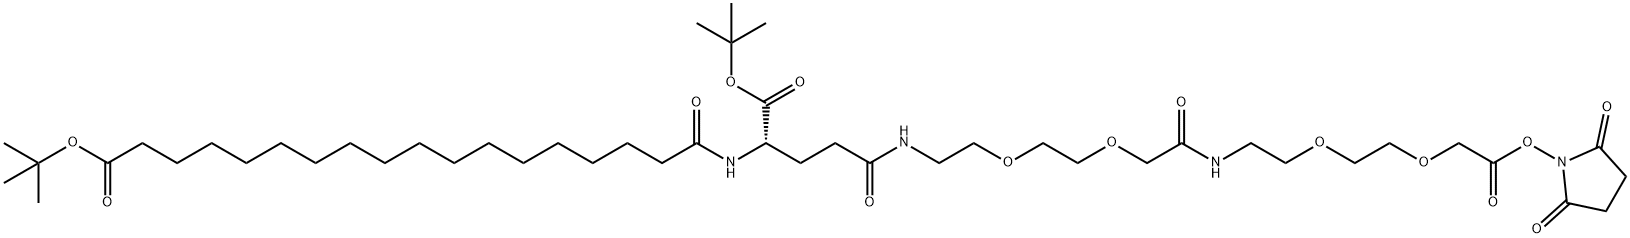 Semaglutide intermediate